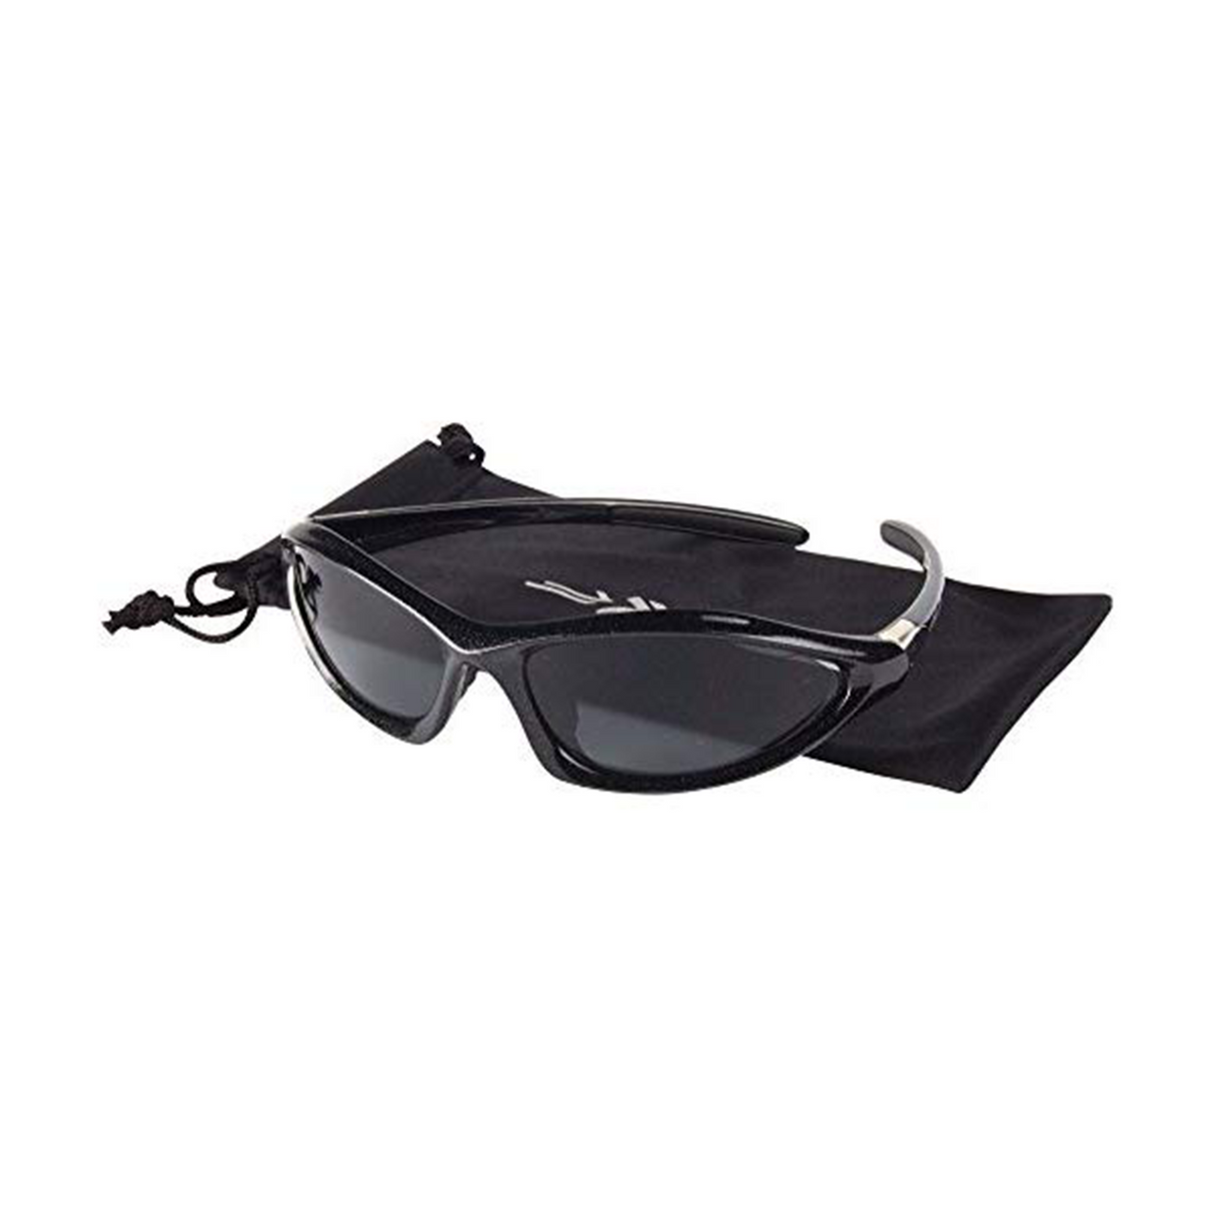 XLC Cape Verde 100% UV Protection Sports Glasses With 2 Interchangeable Lenses - Sportandleisure.com (6968143773850)